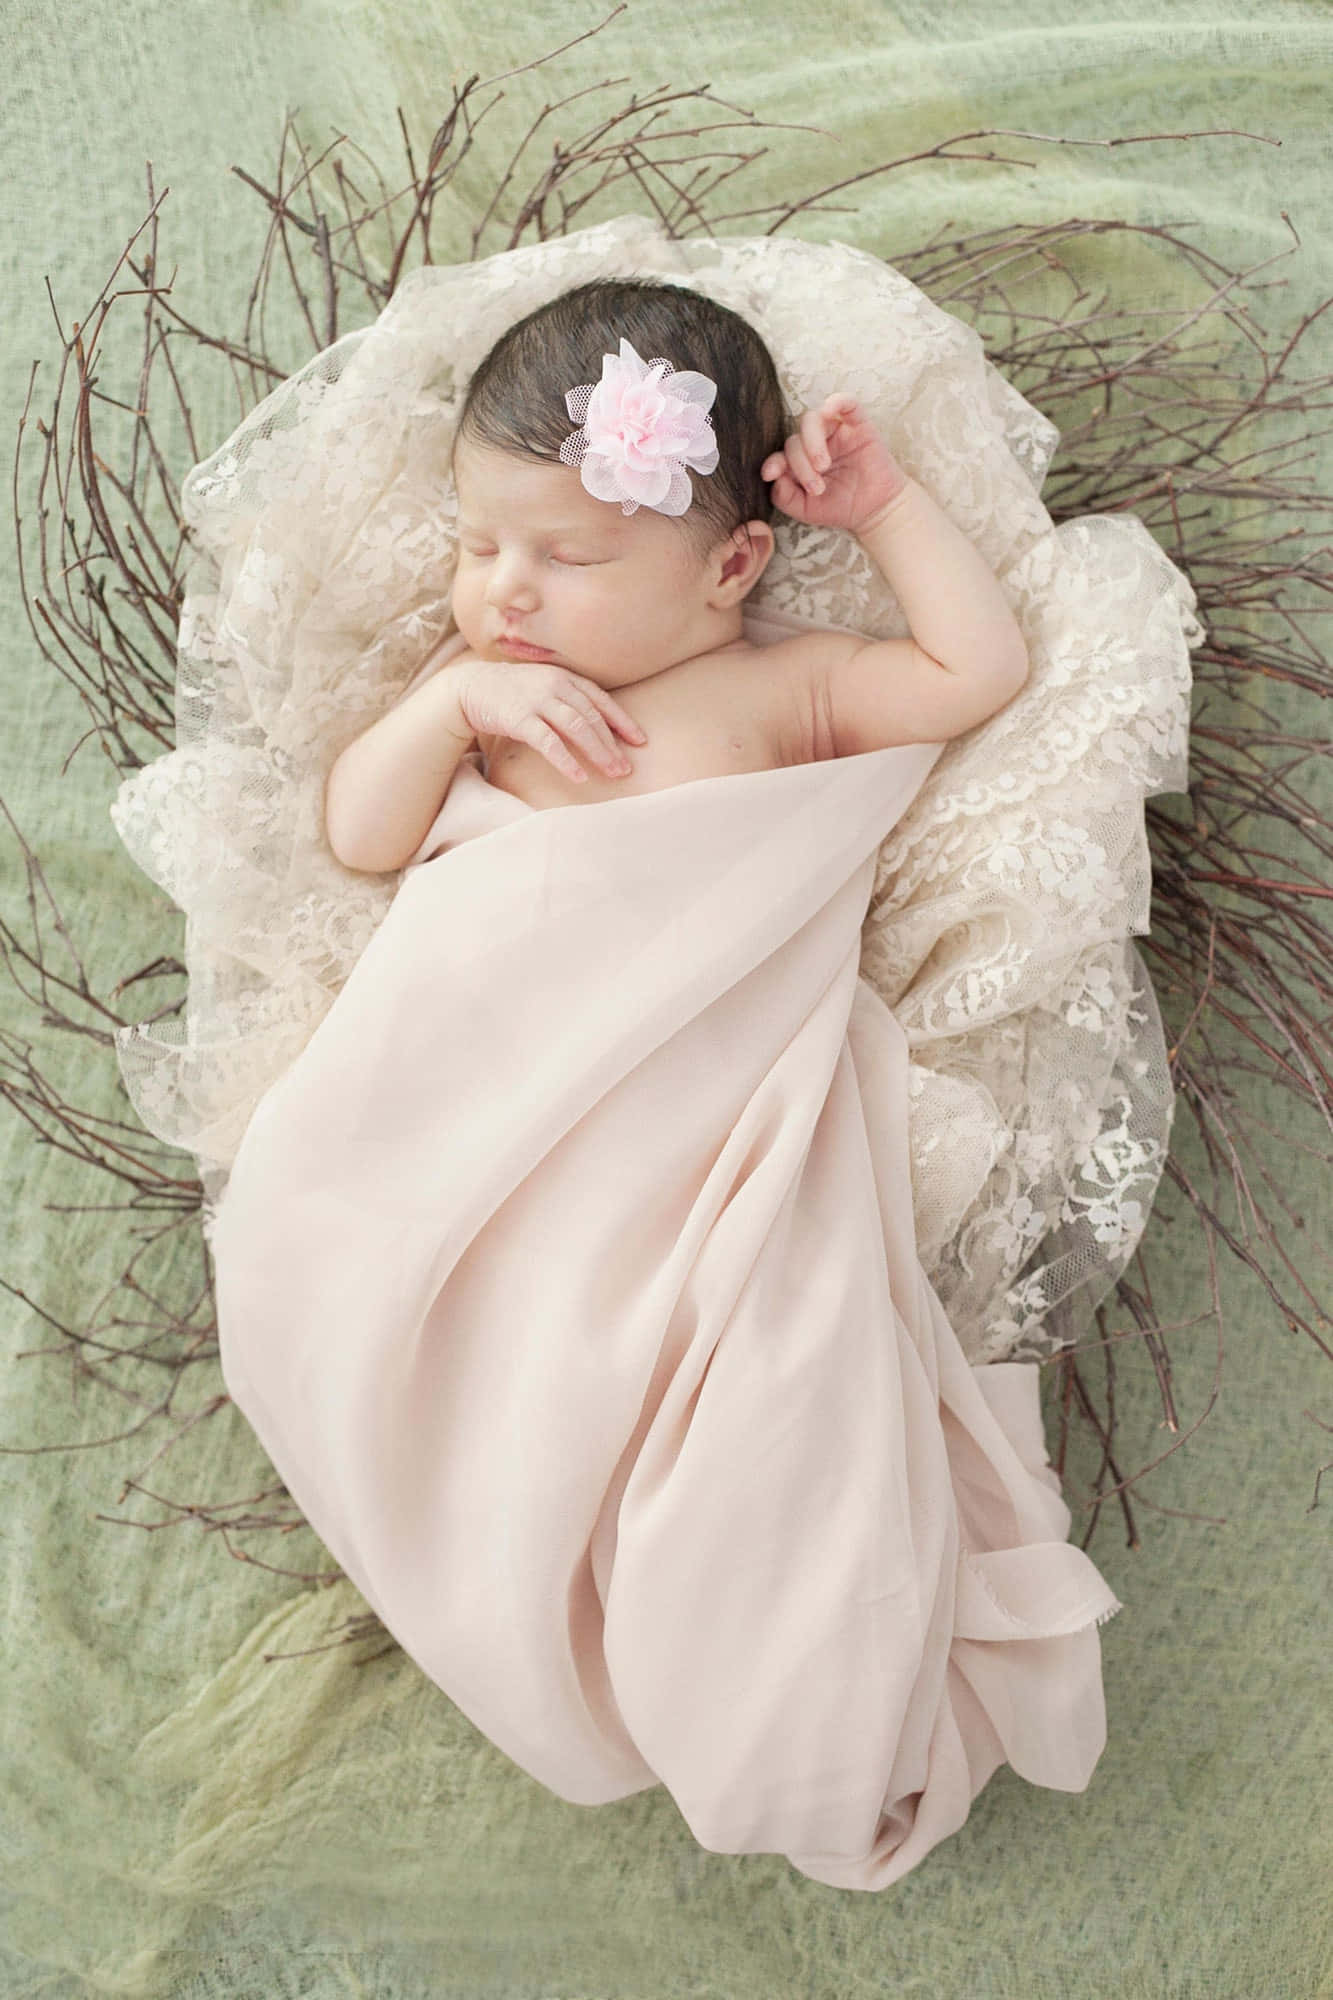 Adorable Newborn Baby Sleeping Peacefully